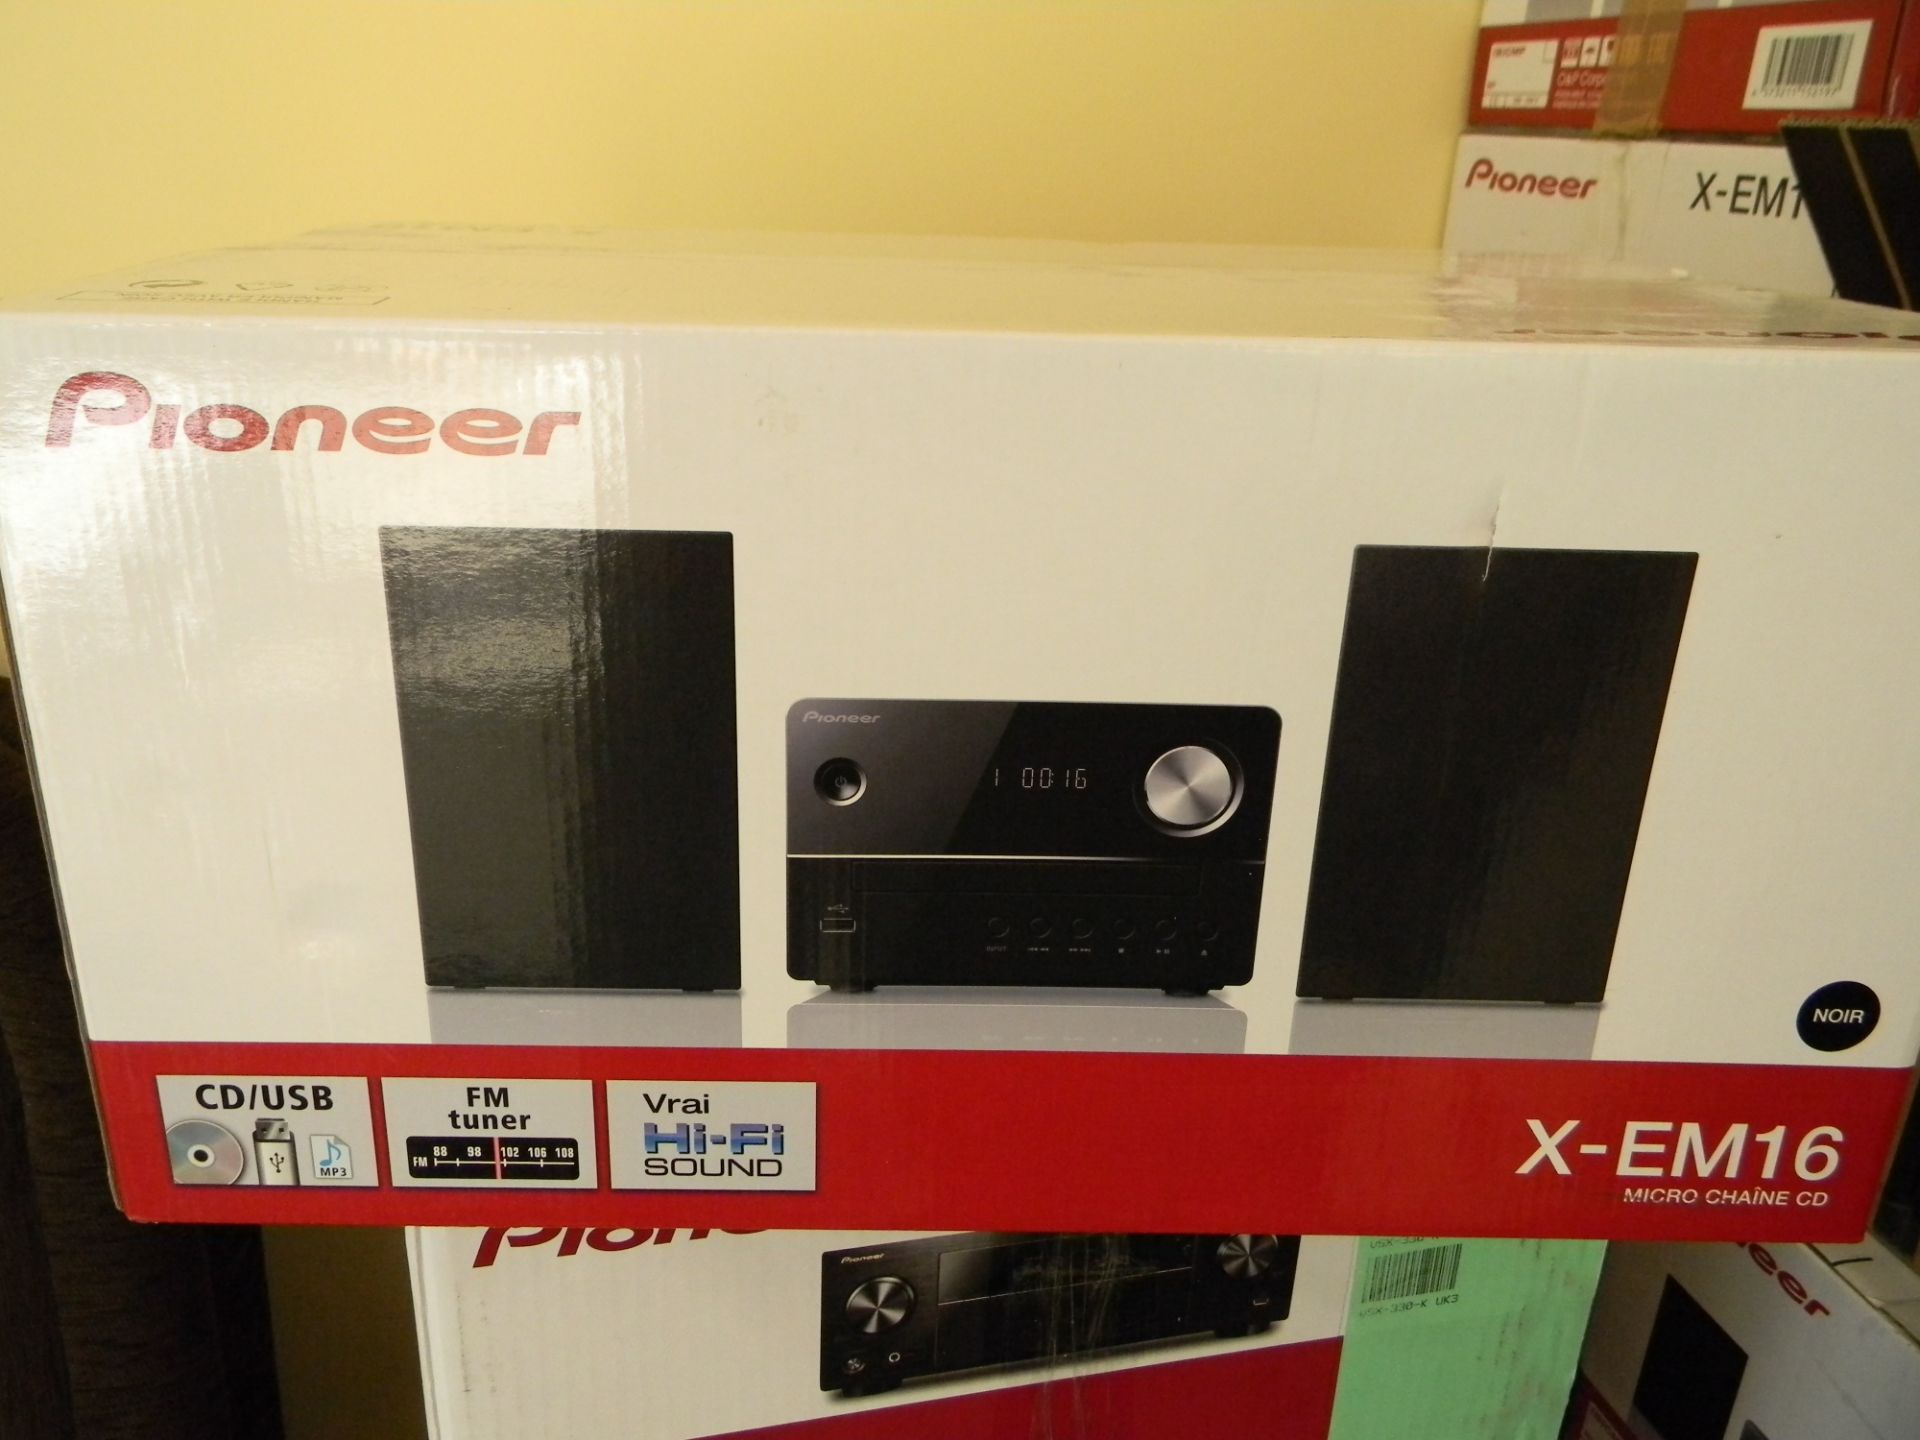 3 x Pioneer X-EM 16 Compact Radio CD with USB System